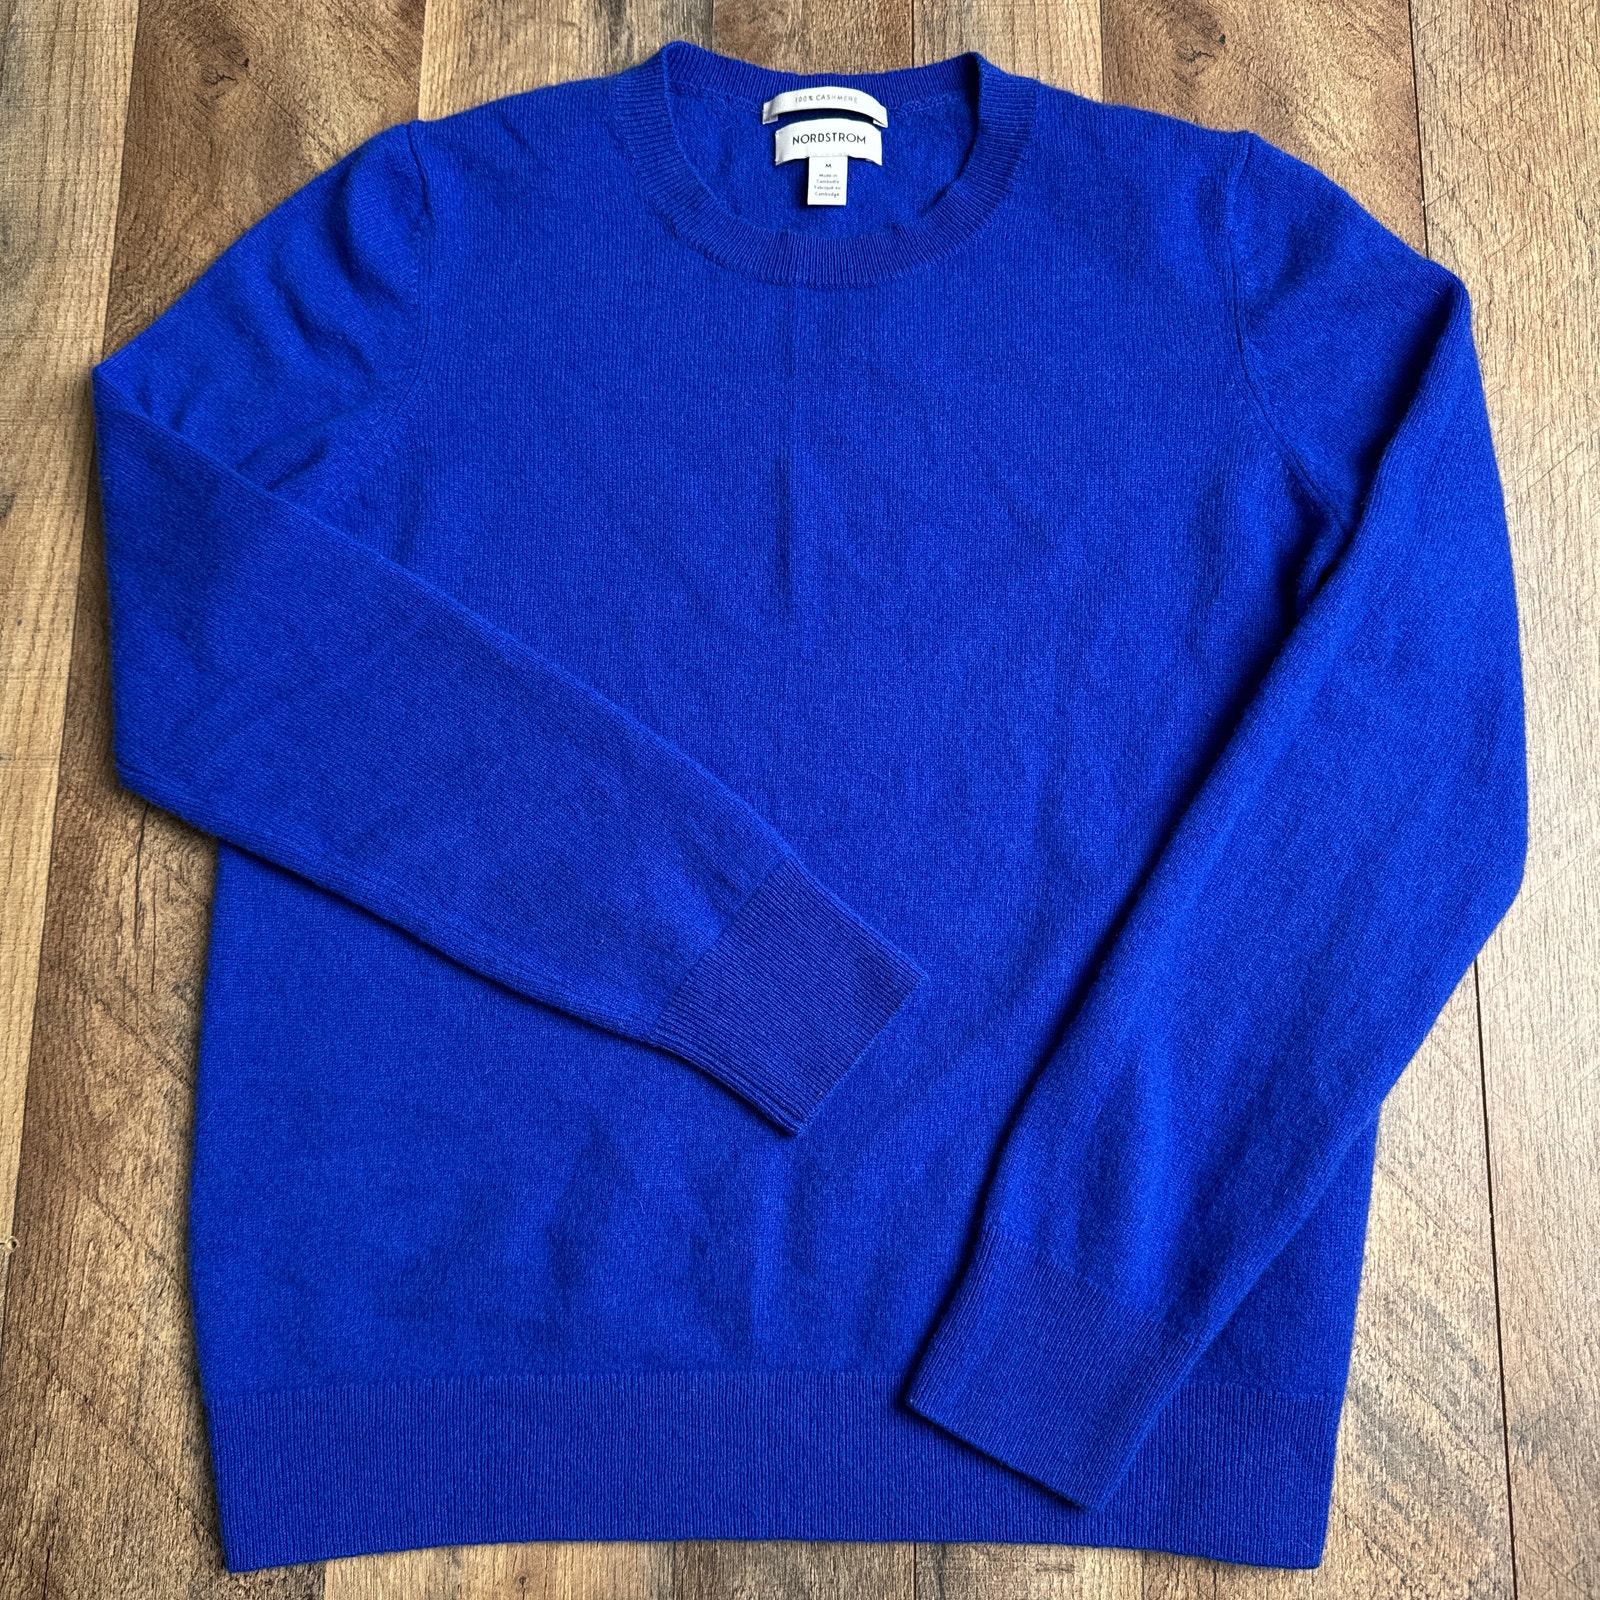 Nordstrom Sweater Women's Size Medium Blue 100% Cashmere Classic ...